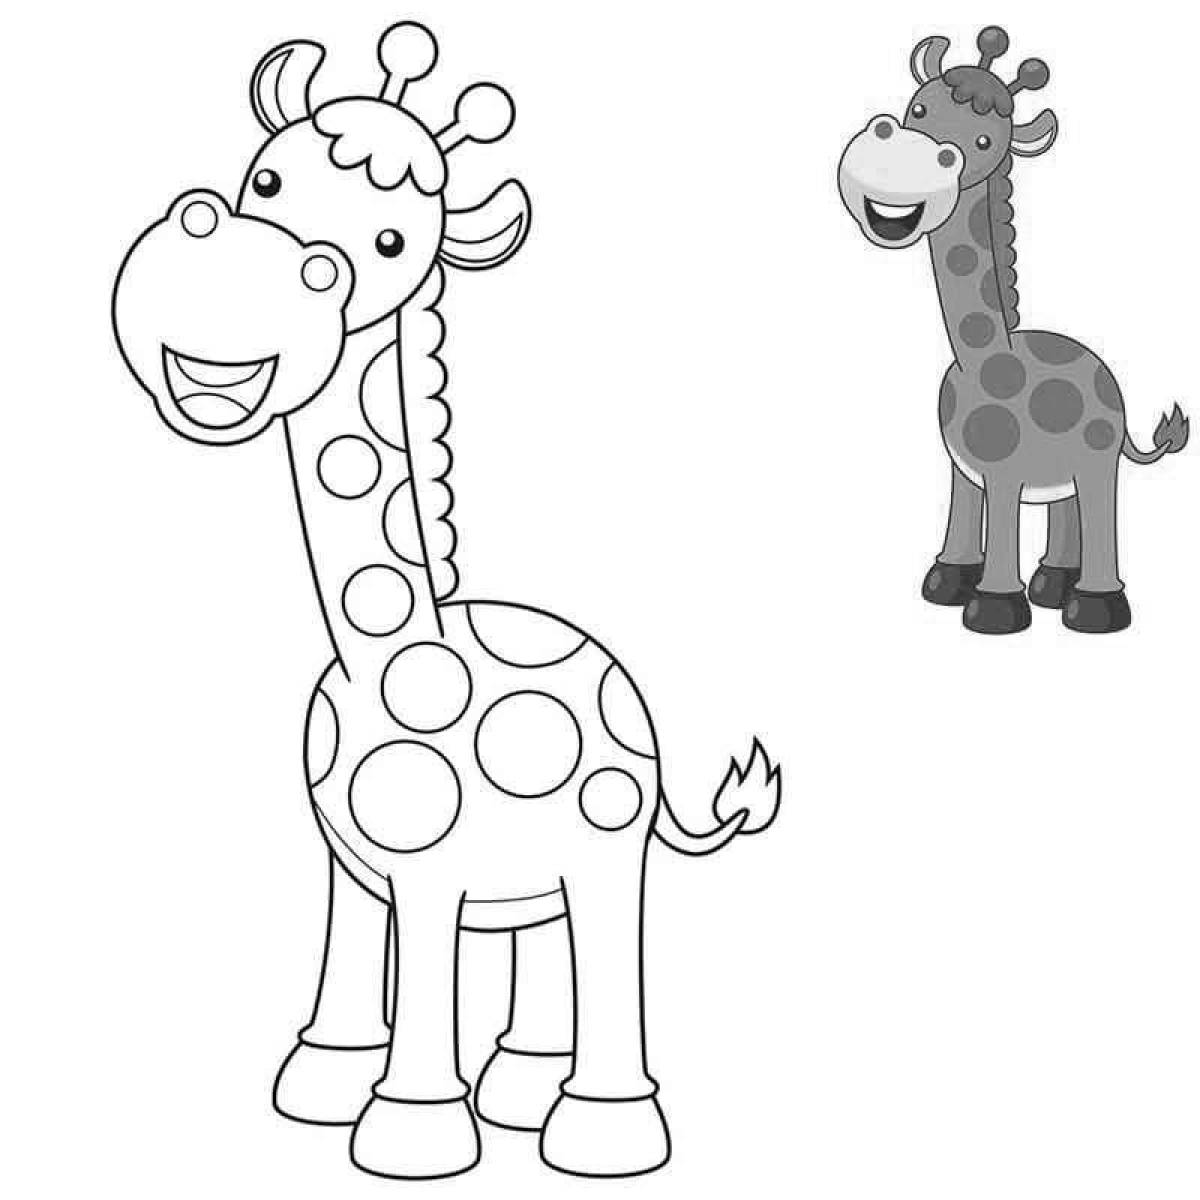 Adorable giraffe coloring page